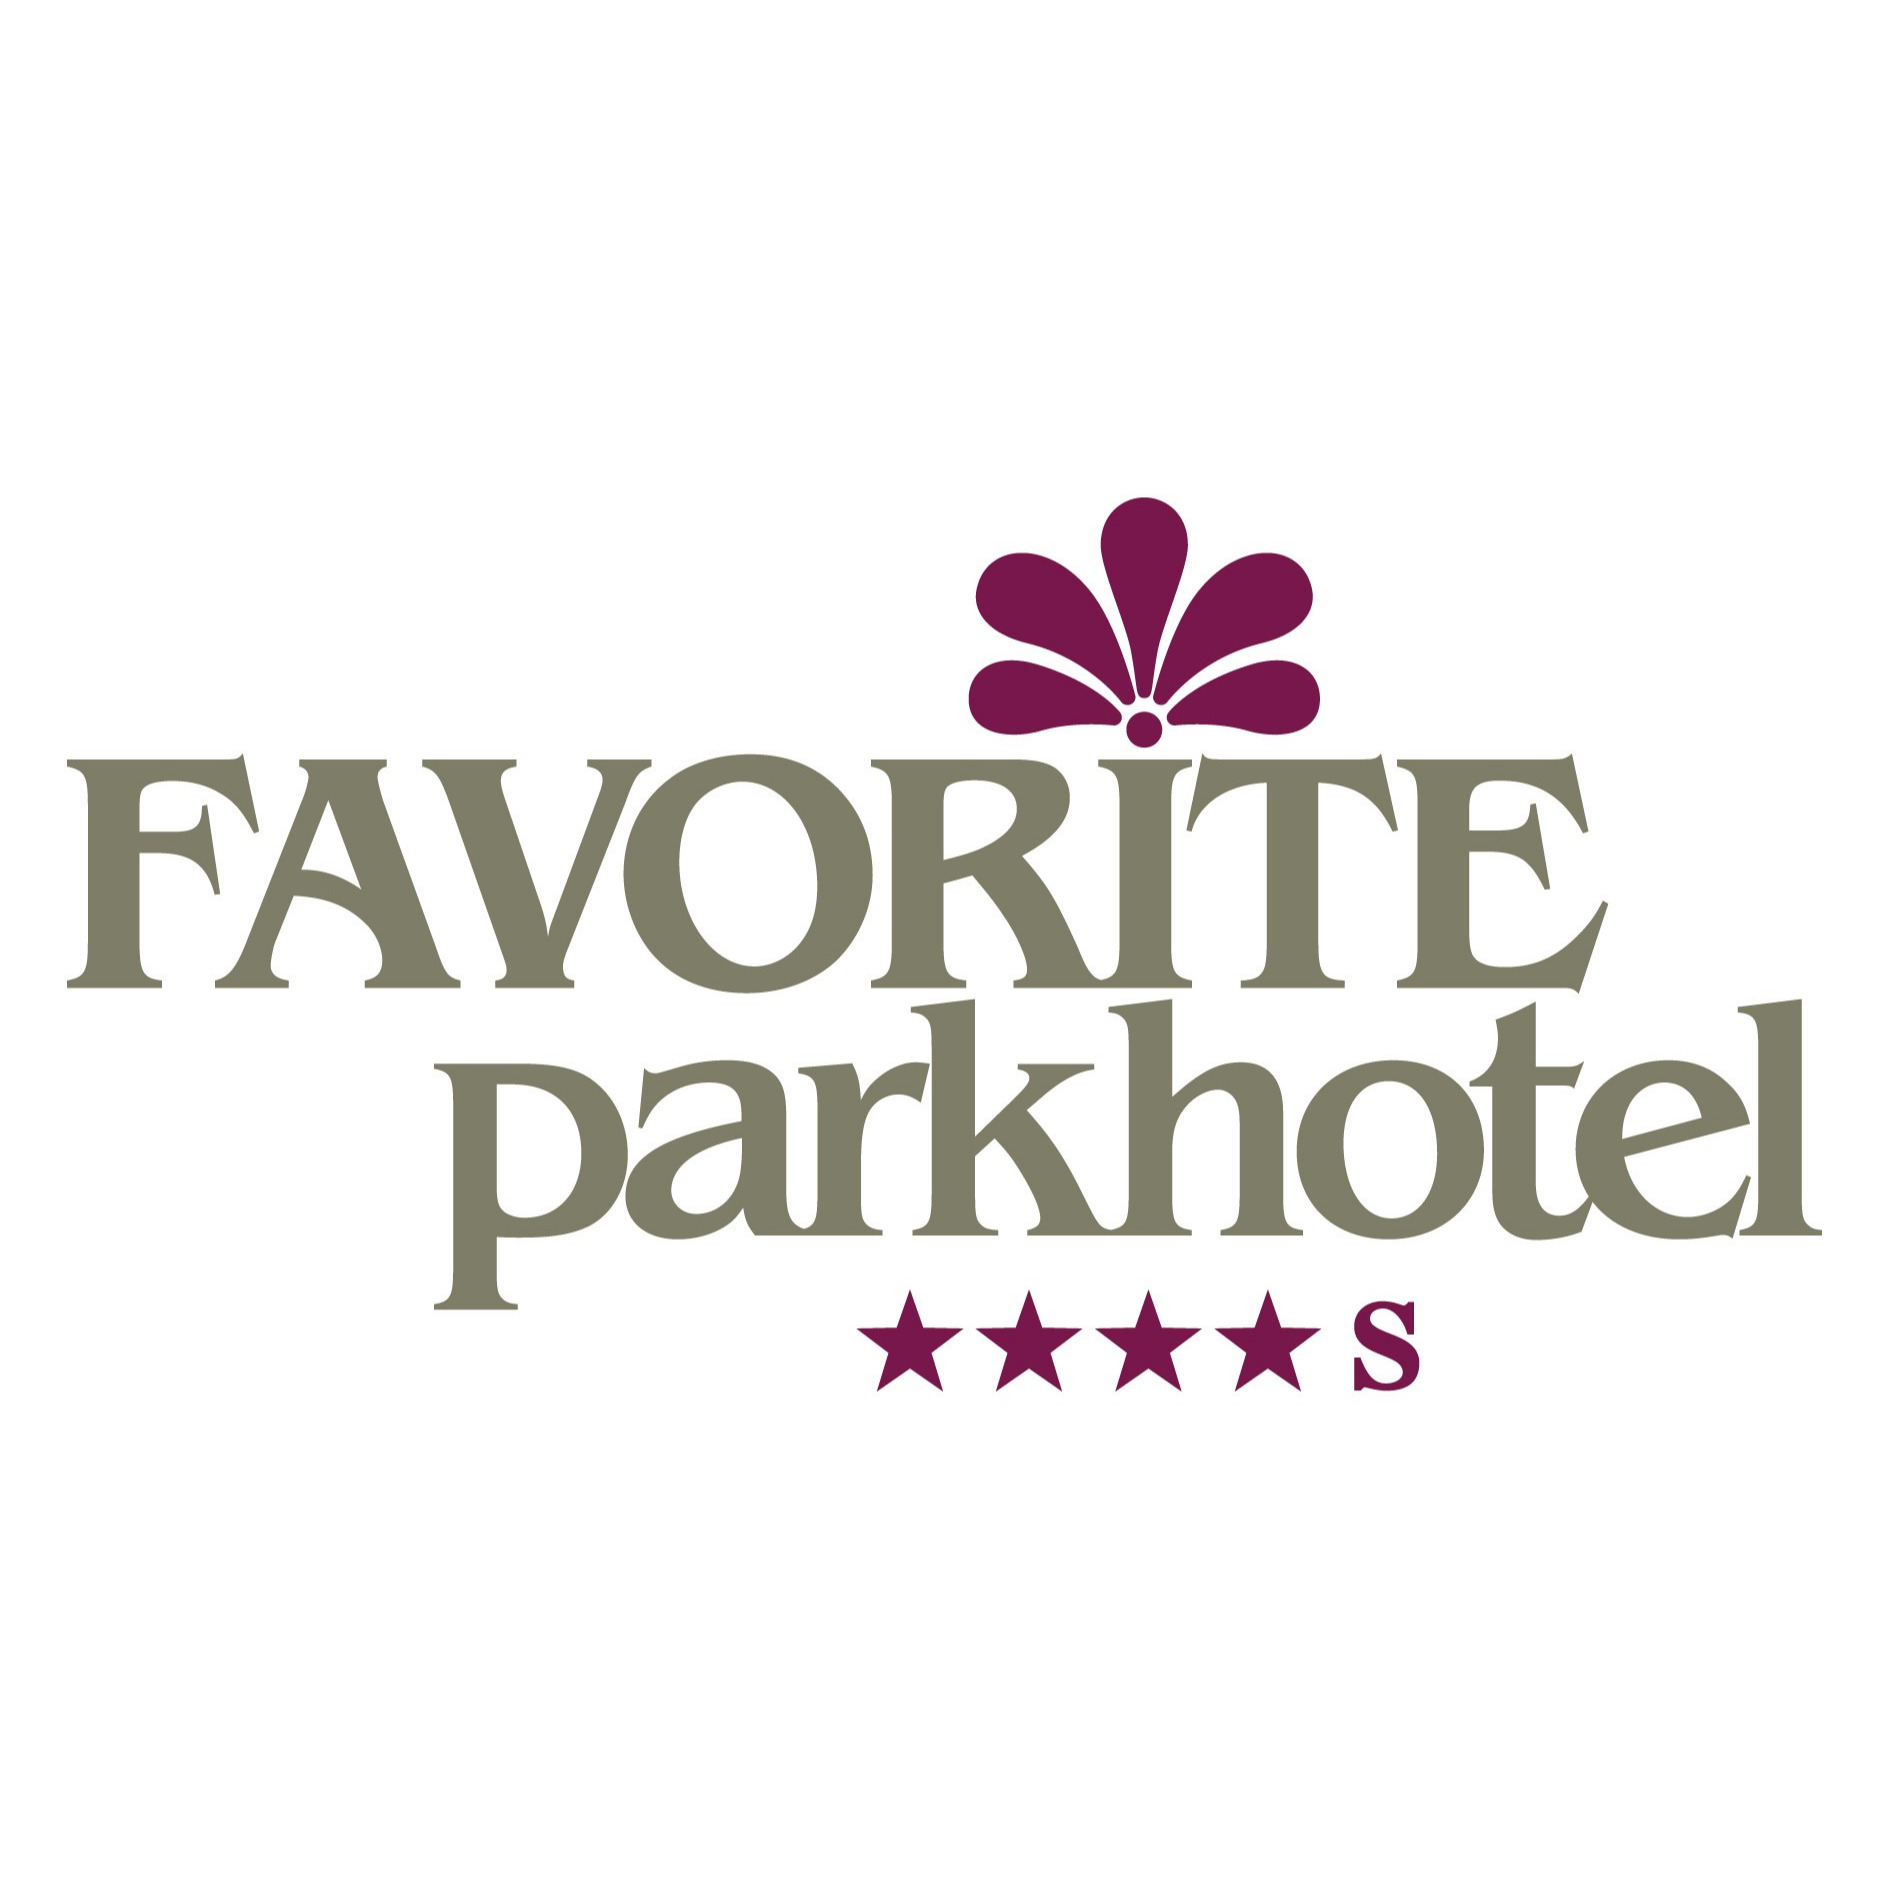 Favorite Parkhotel  